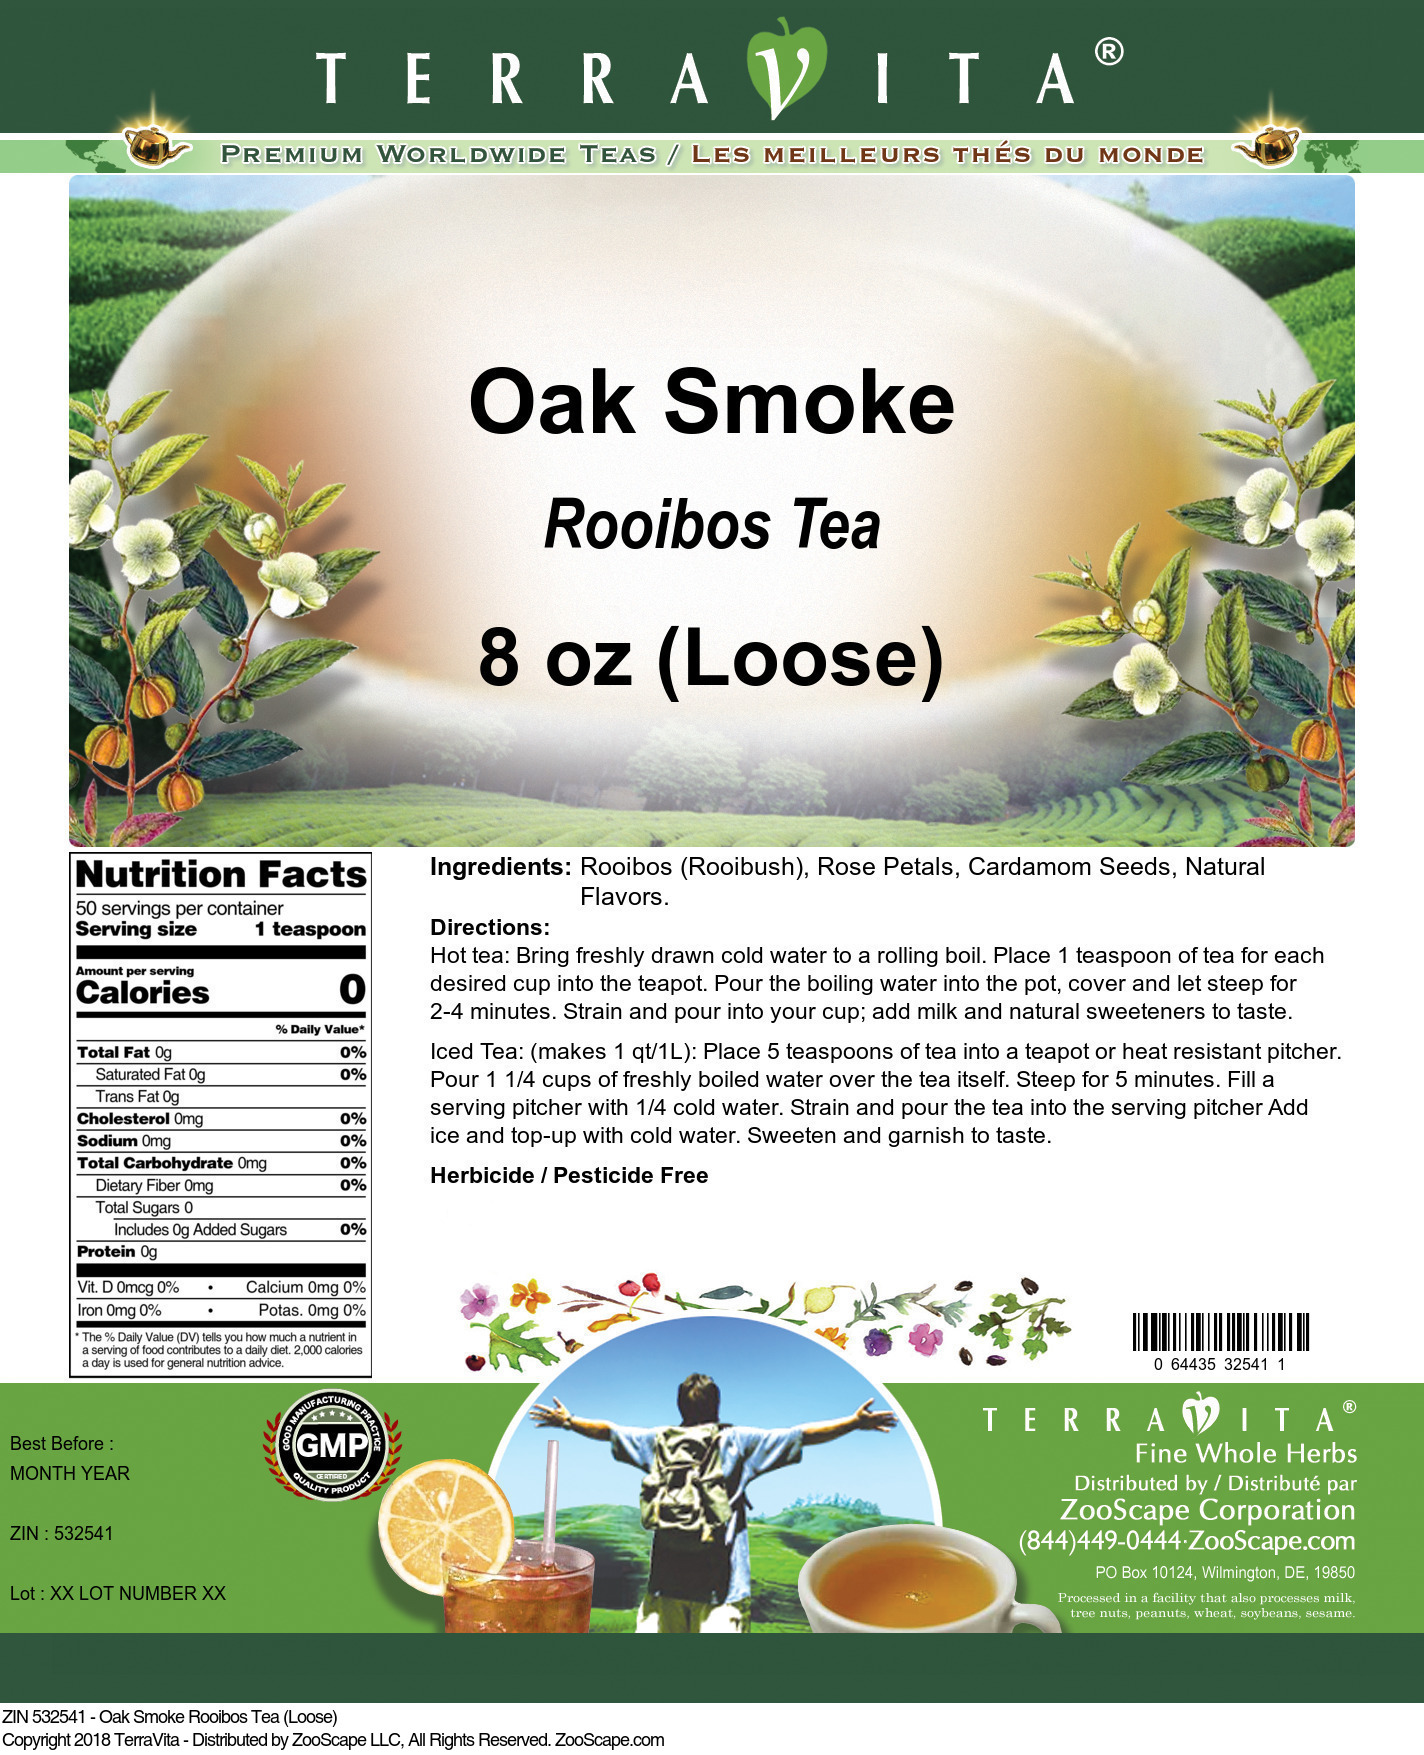 Oak Smoke Rooibos Tea (Loose) - Label